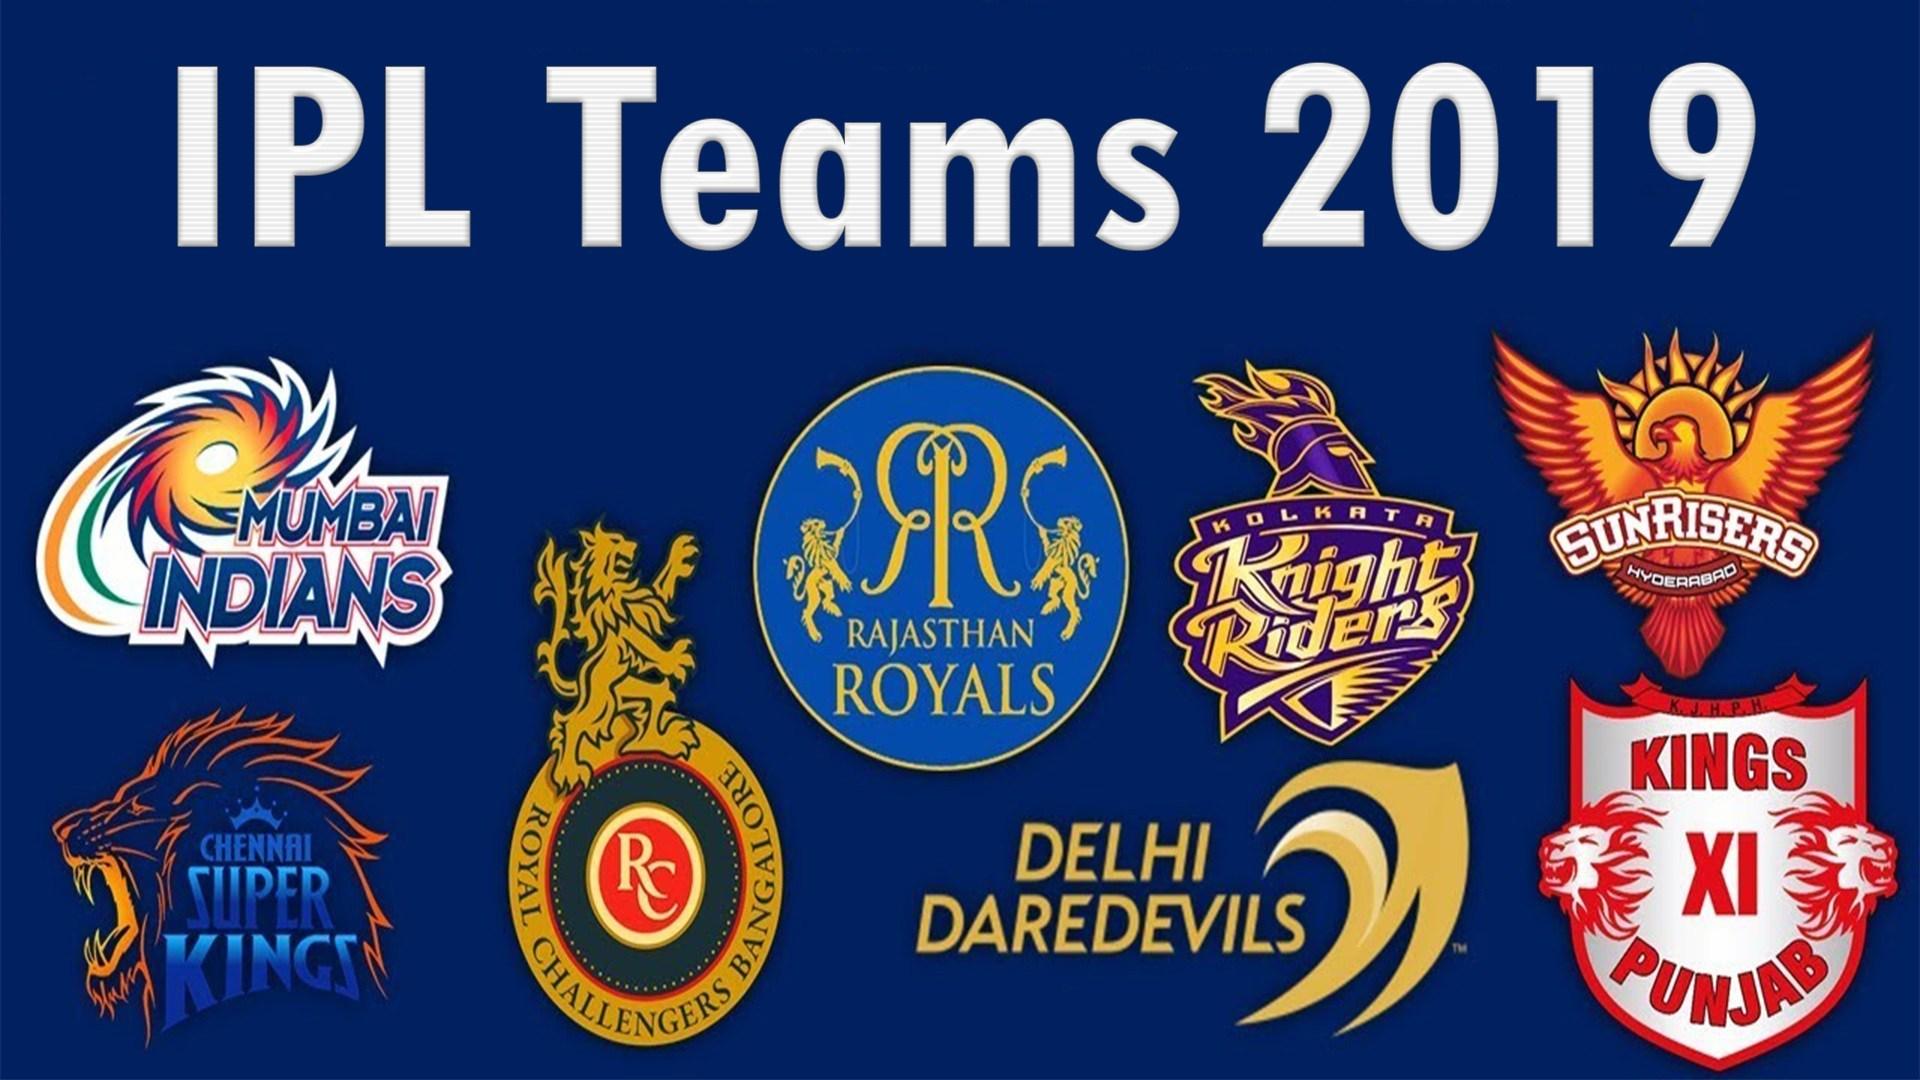 IPL Teams Logo Image & HD Wallpaper 2019